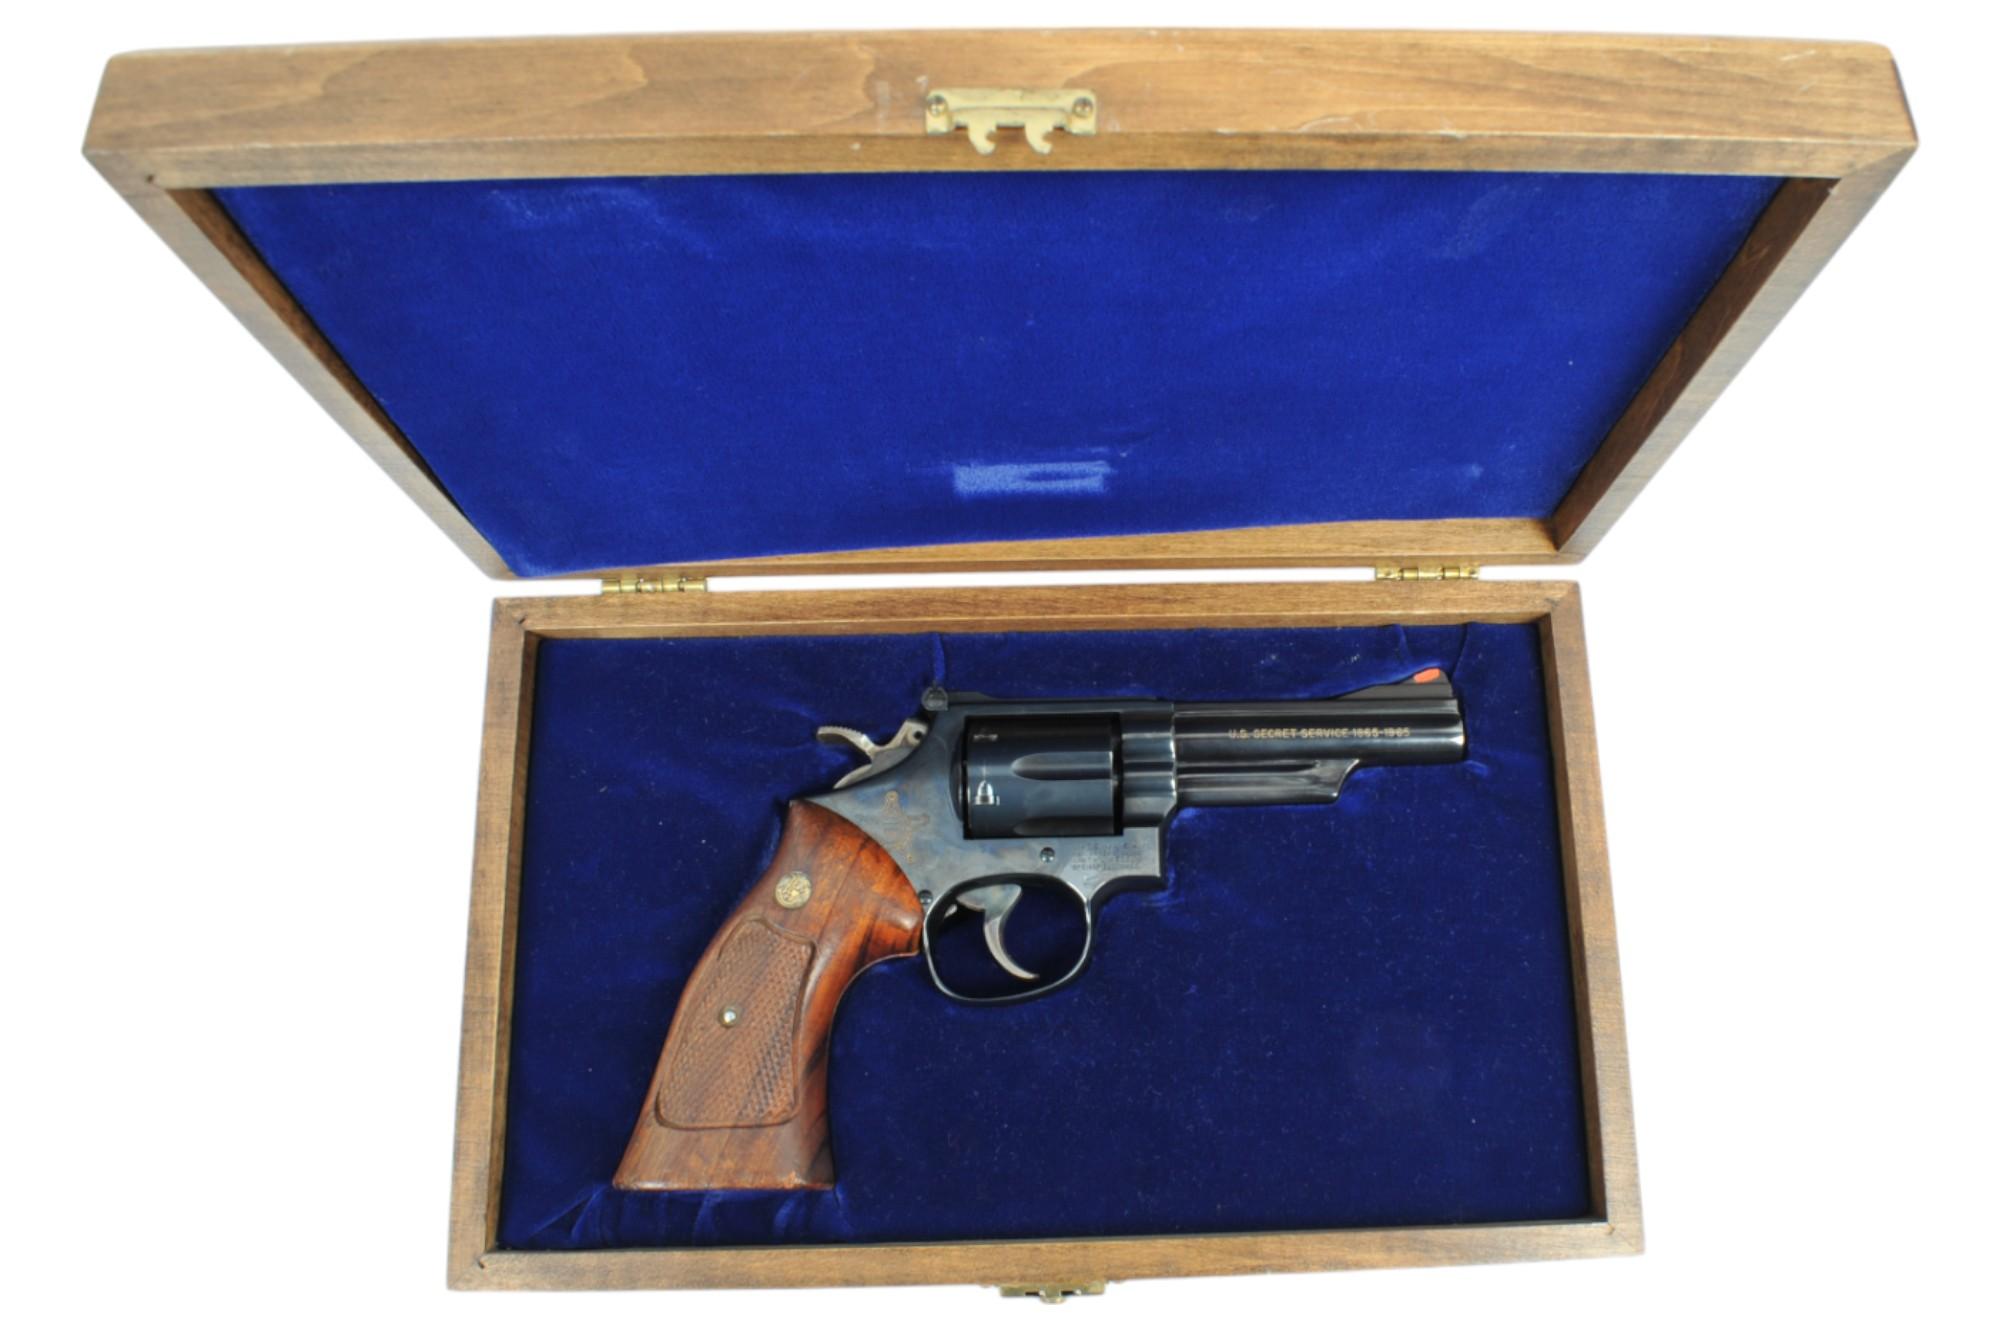 Smith and Wesson Secret Service Model 19-5 .357 Mag Revolver - FFL #194K252 (PAT1)